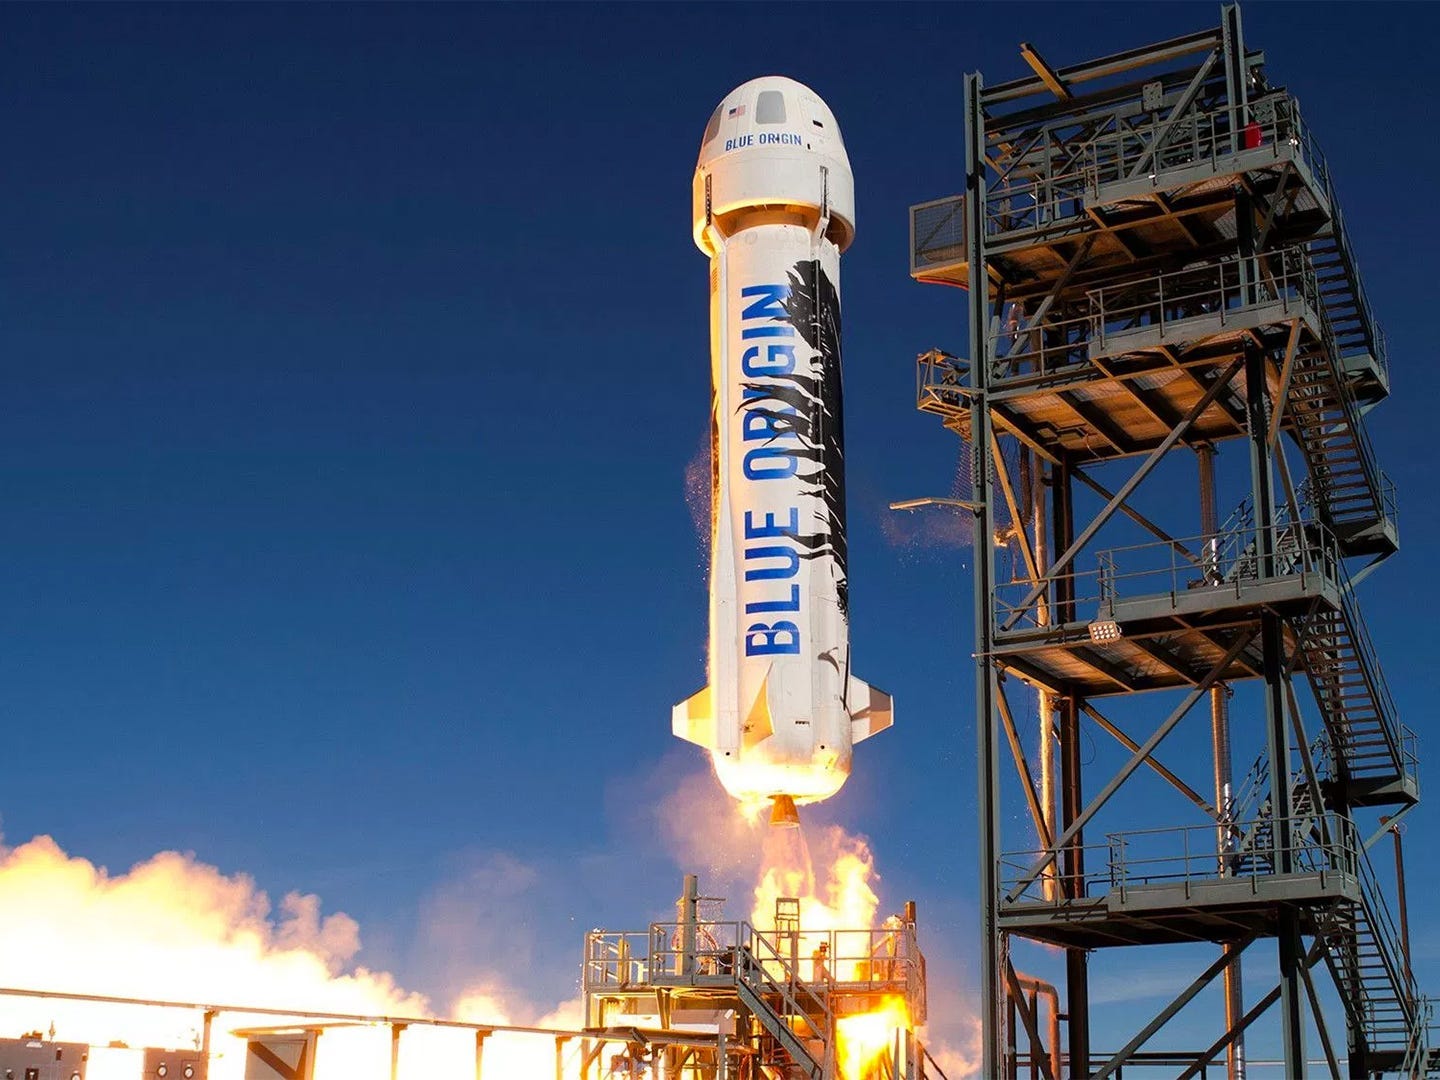 Blue Origin's reusable New Shepard suborbital rocket launches toward space in 2016.